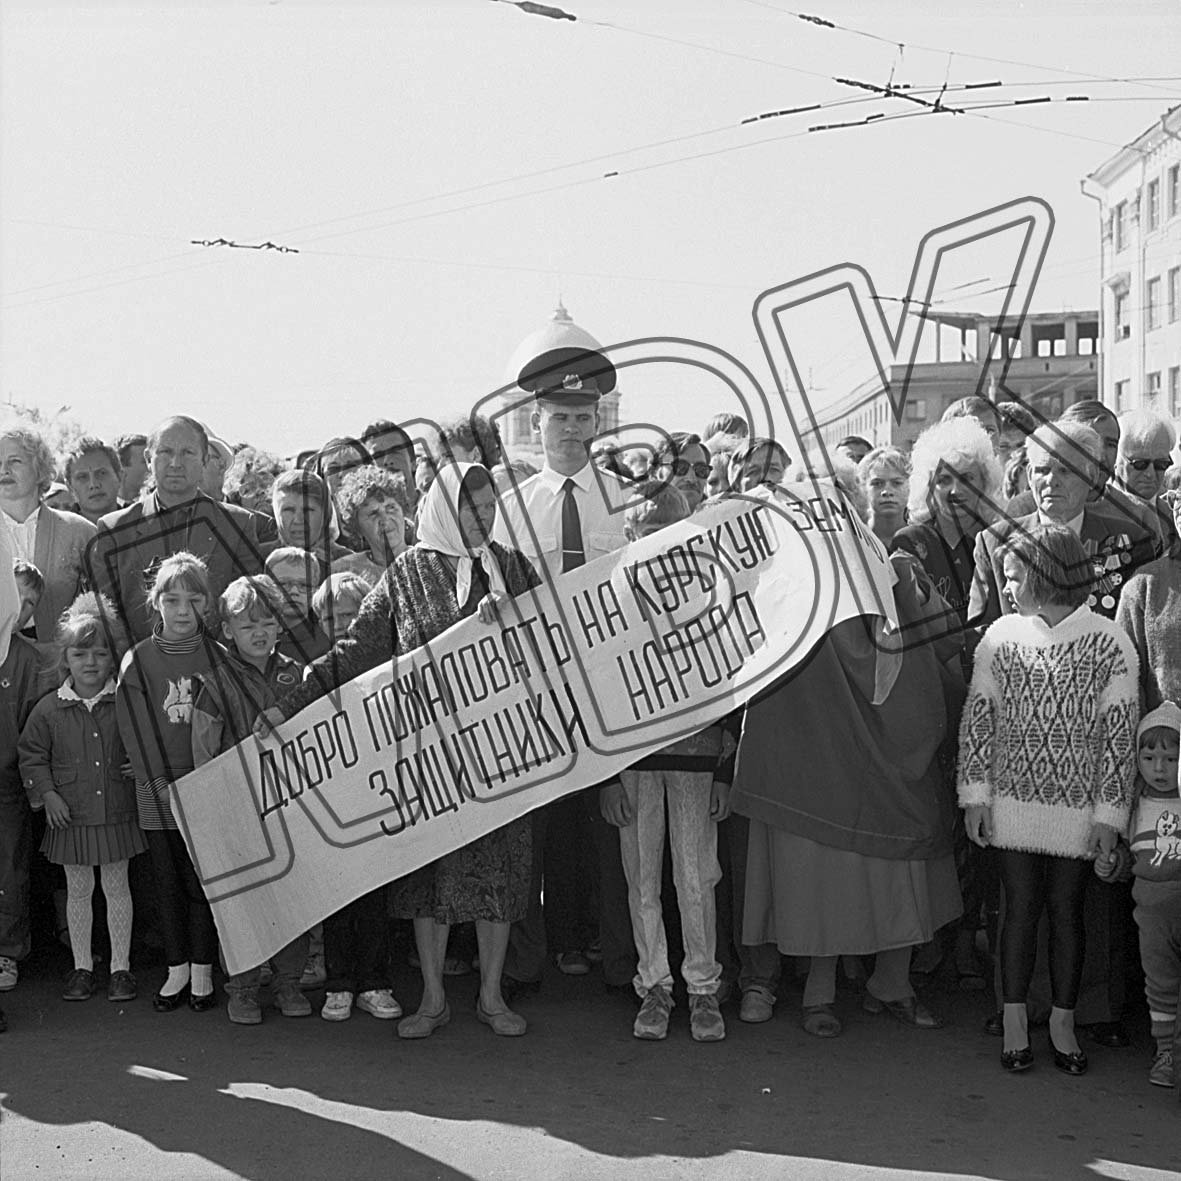 Fotografie: Begrüßung der Berlin-Brigade durch Einheimische, Kursk, 4./5. September 1994 (Museum Berlin-Karlshorst RR-P)